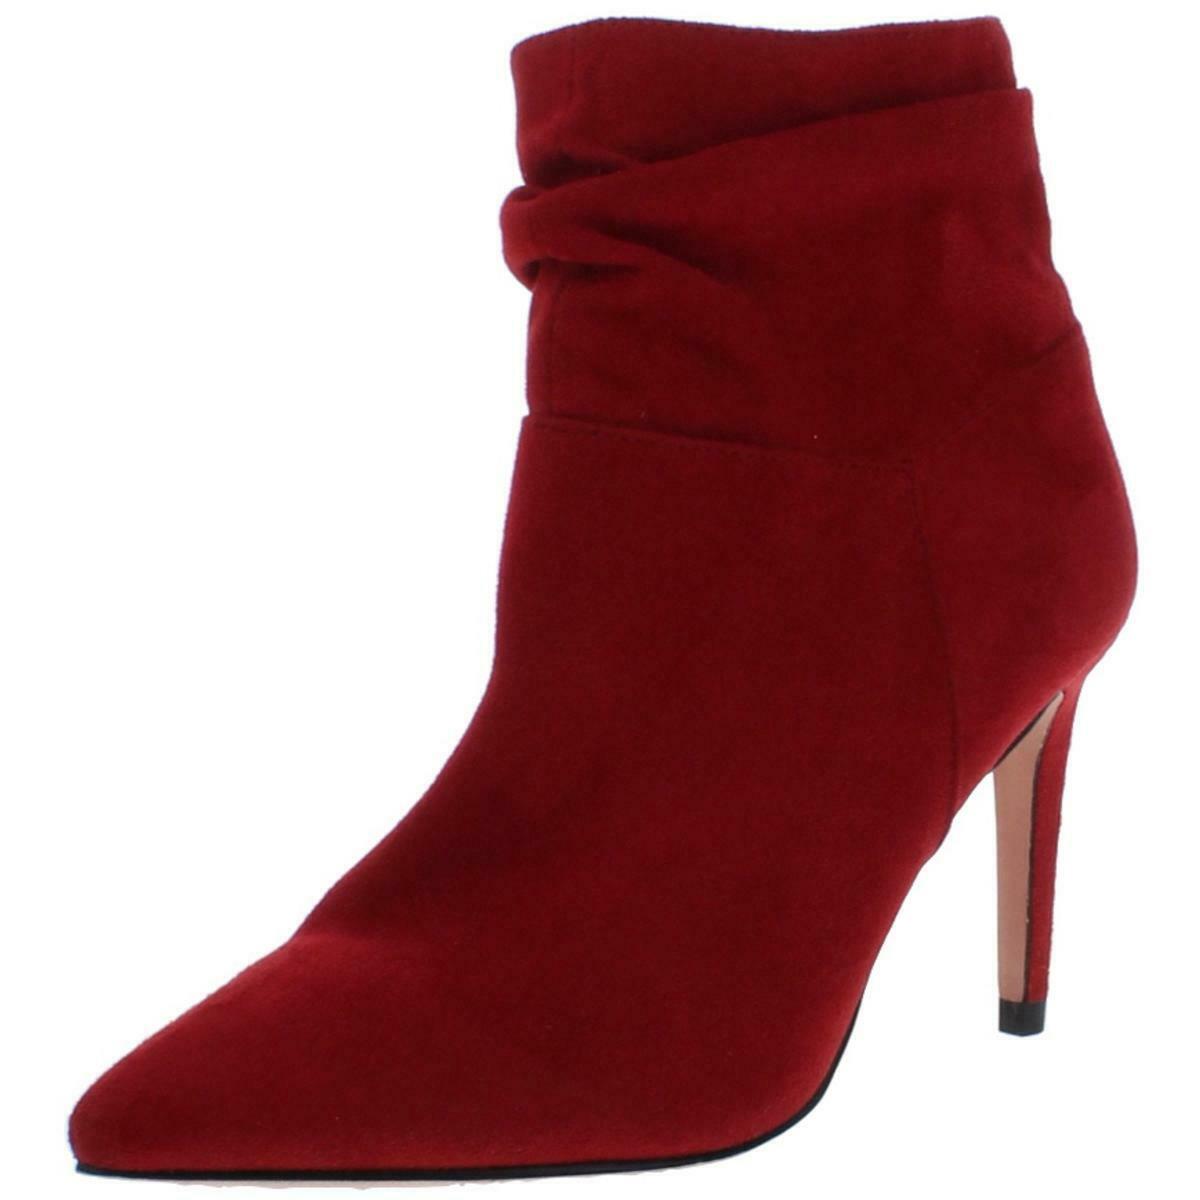 XOXO Womens Taniah Red Faux Suede Pumps Booties Shoes 7.5 Medium (B,M) BHFO 2665